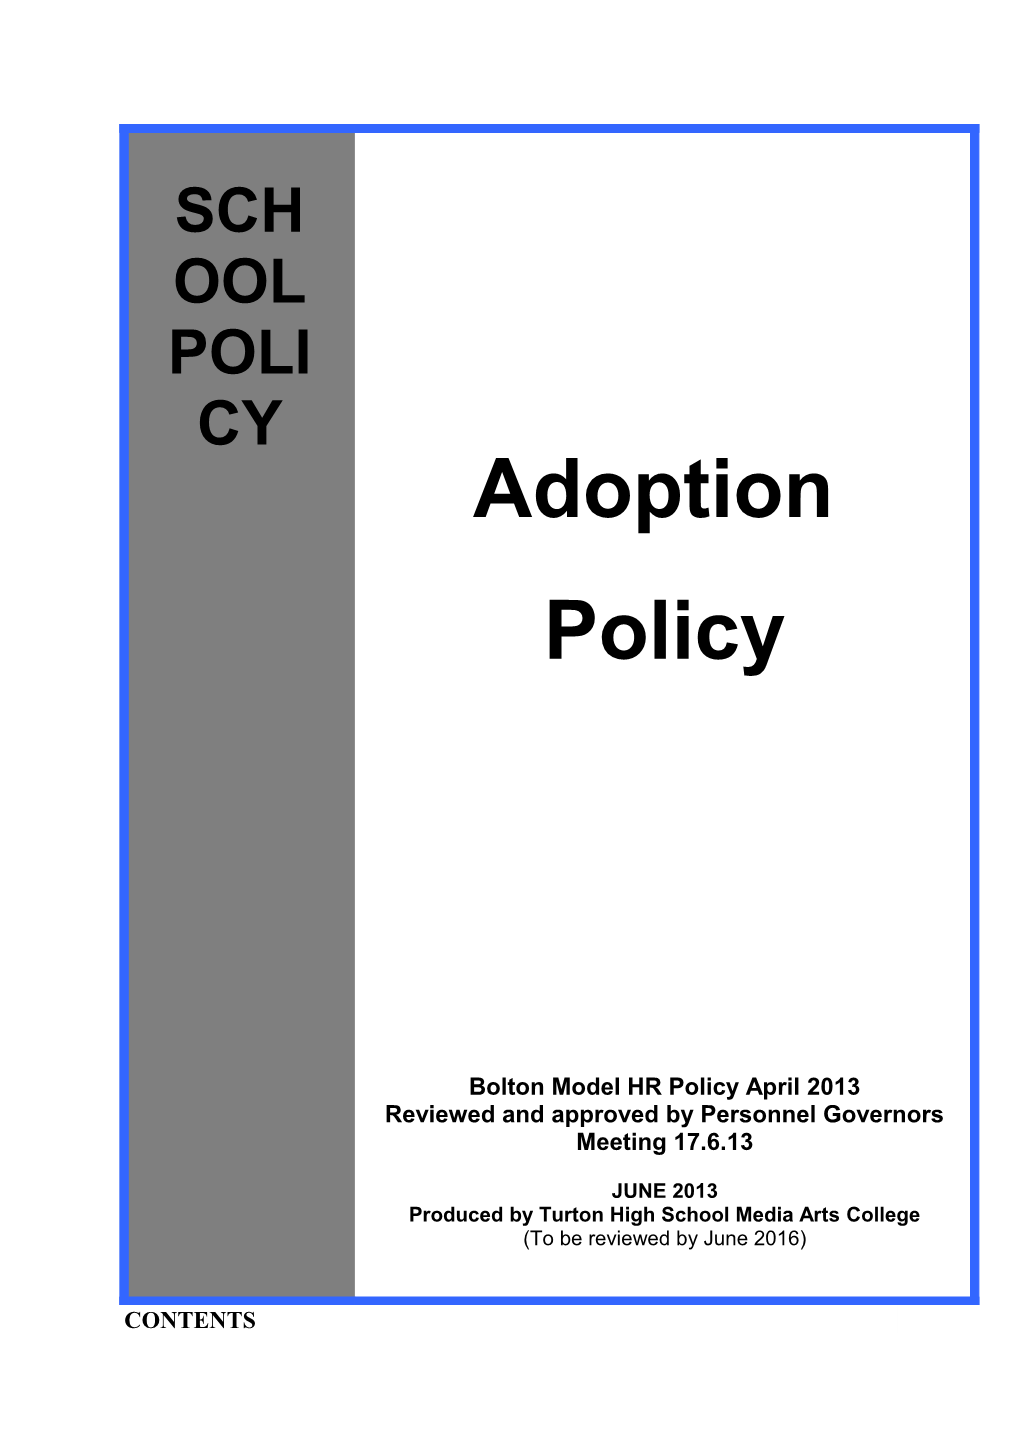 Adoption Policy (School Model)